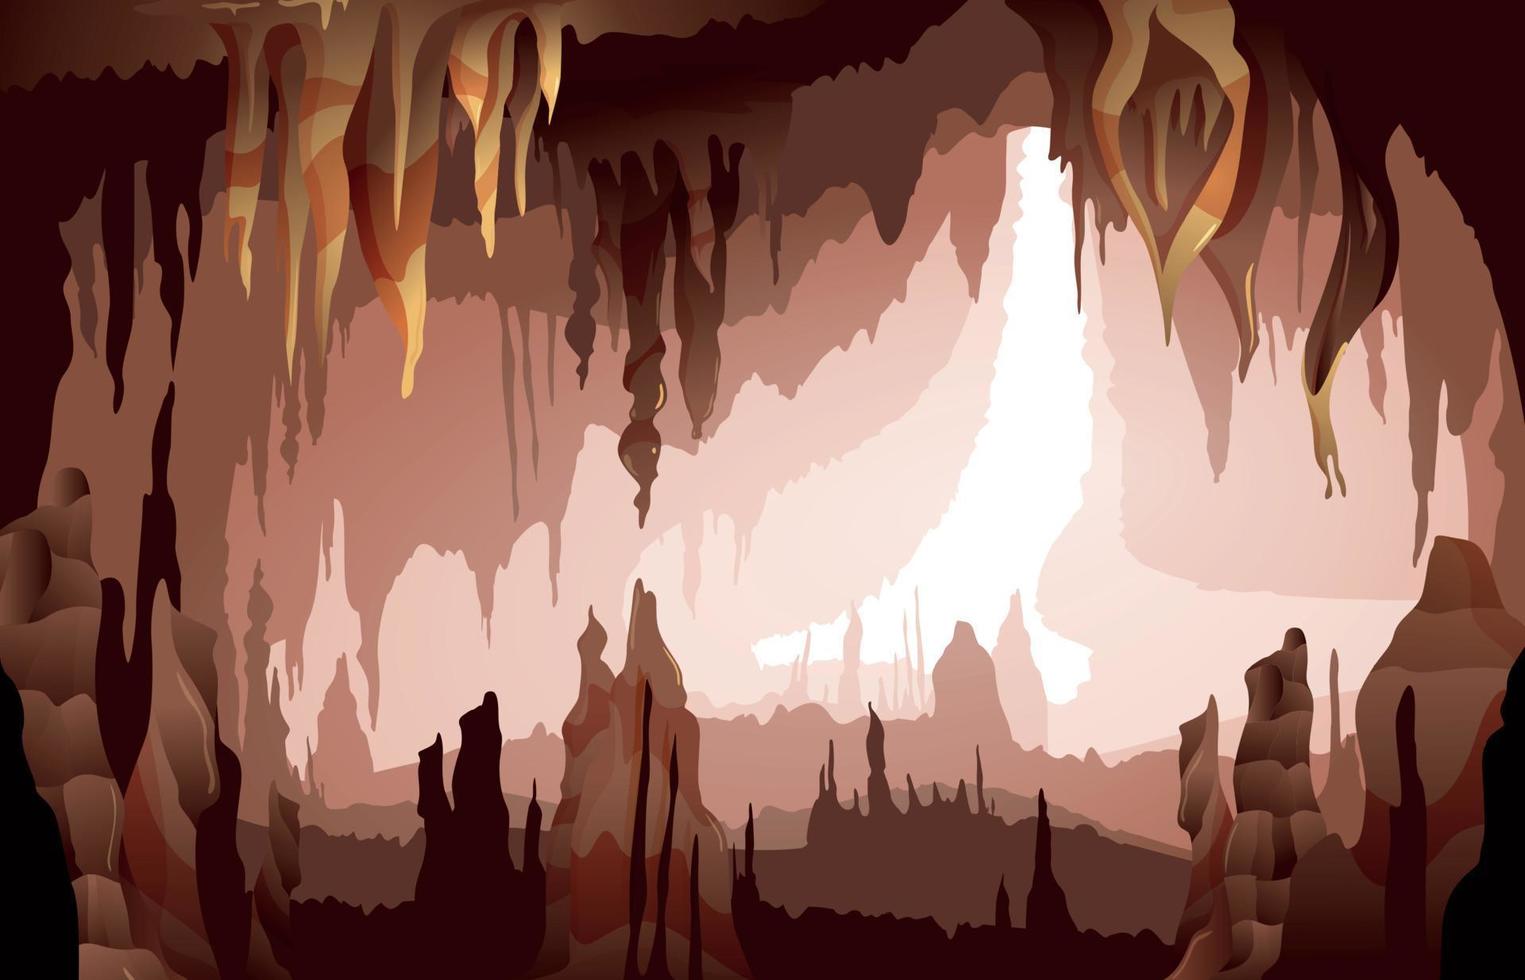 stalactites-stalagmites-cave-interior-view-vector.jpg